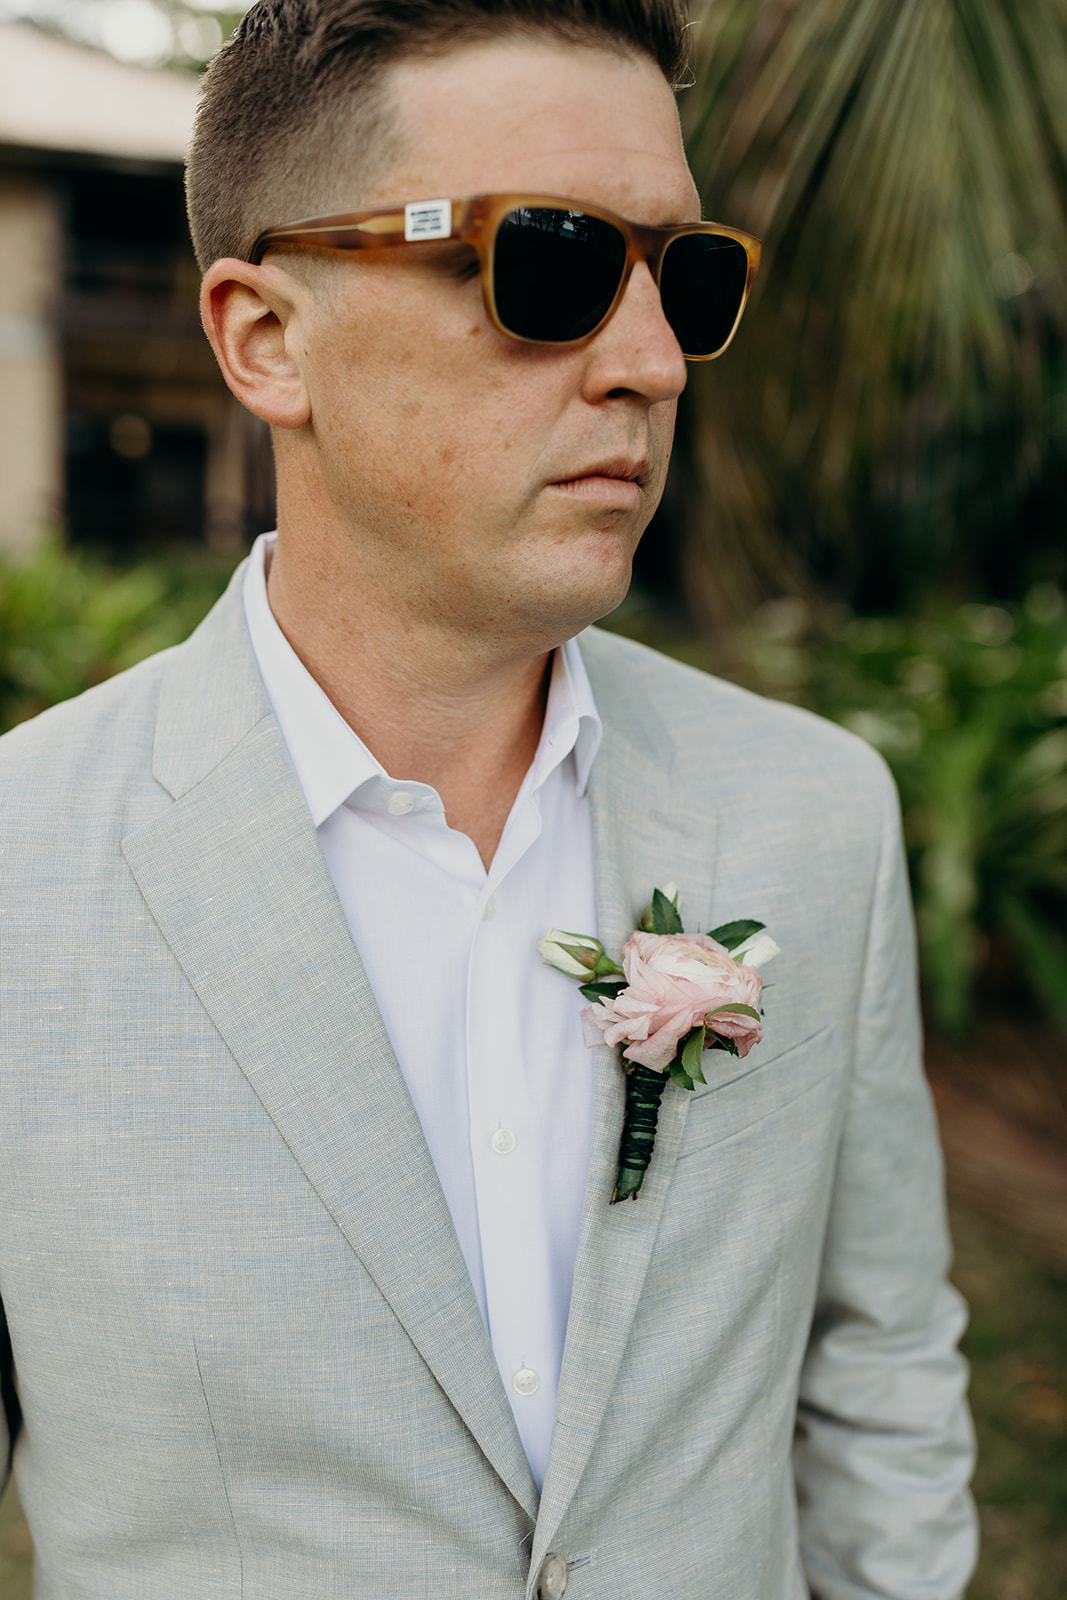 Groom wearing sunglasses at Caribbean destination wedding